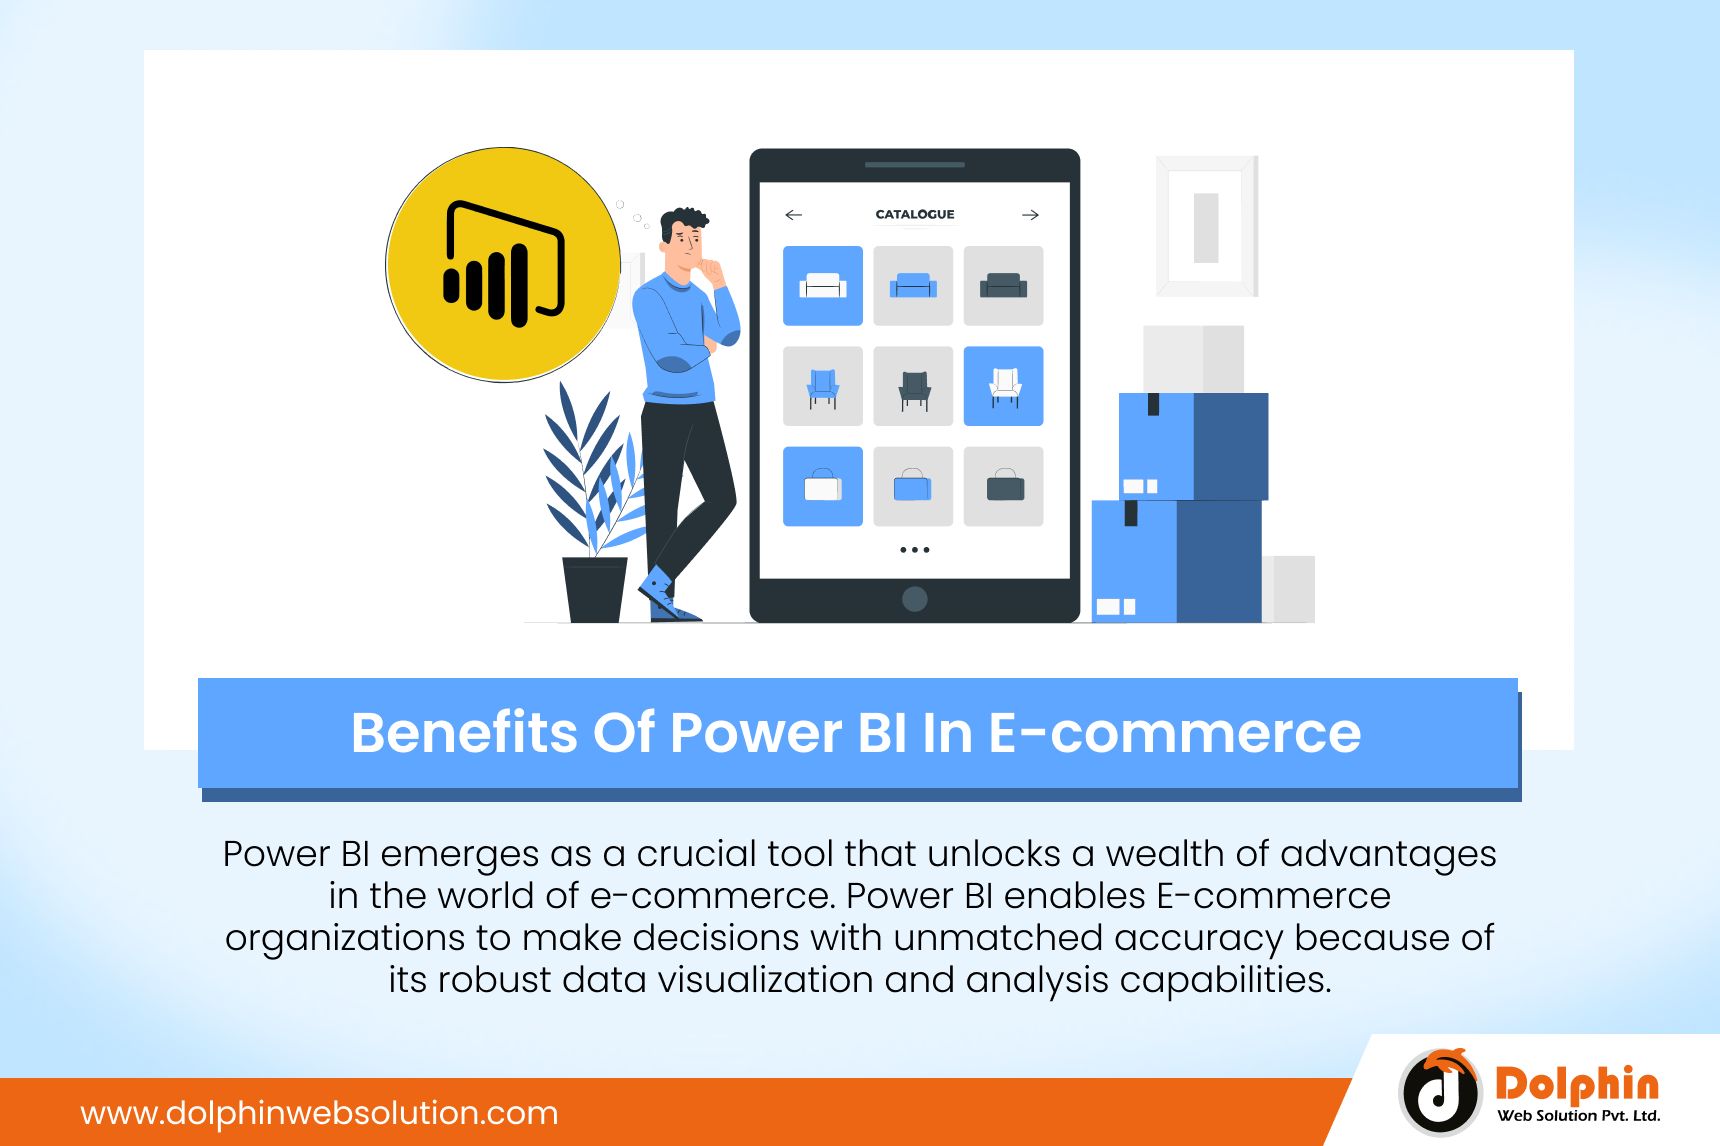 Benefits Of Power BI In E-commerce